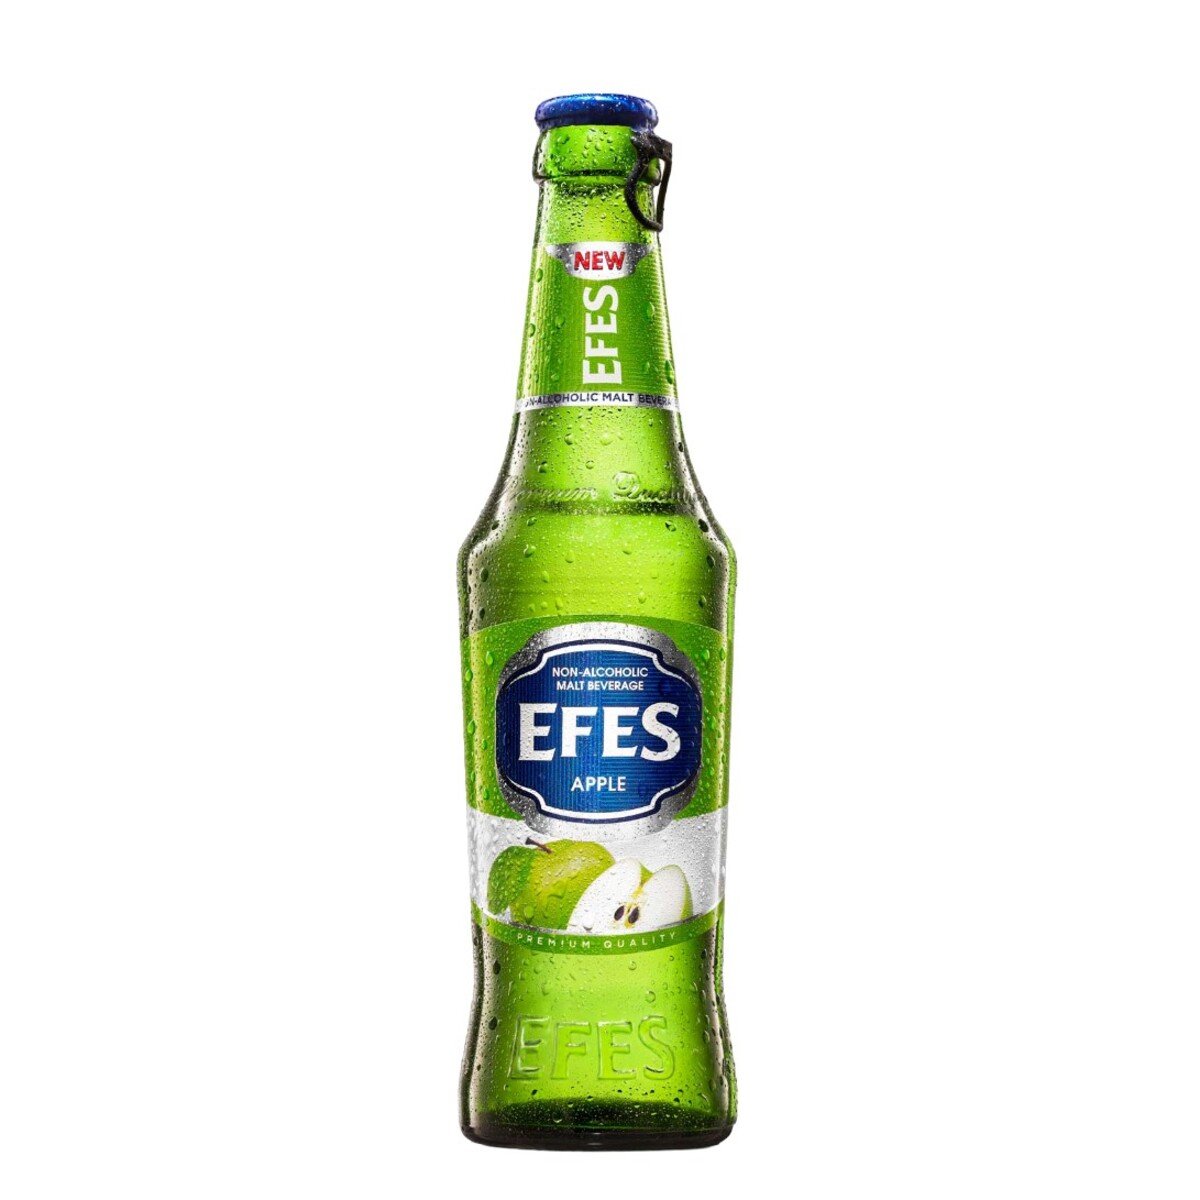 Efes Non Alcoholic Malt Beverage with Apple Flavor 330 ml